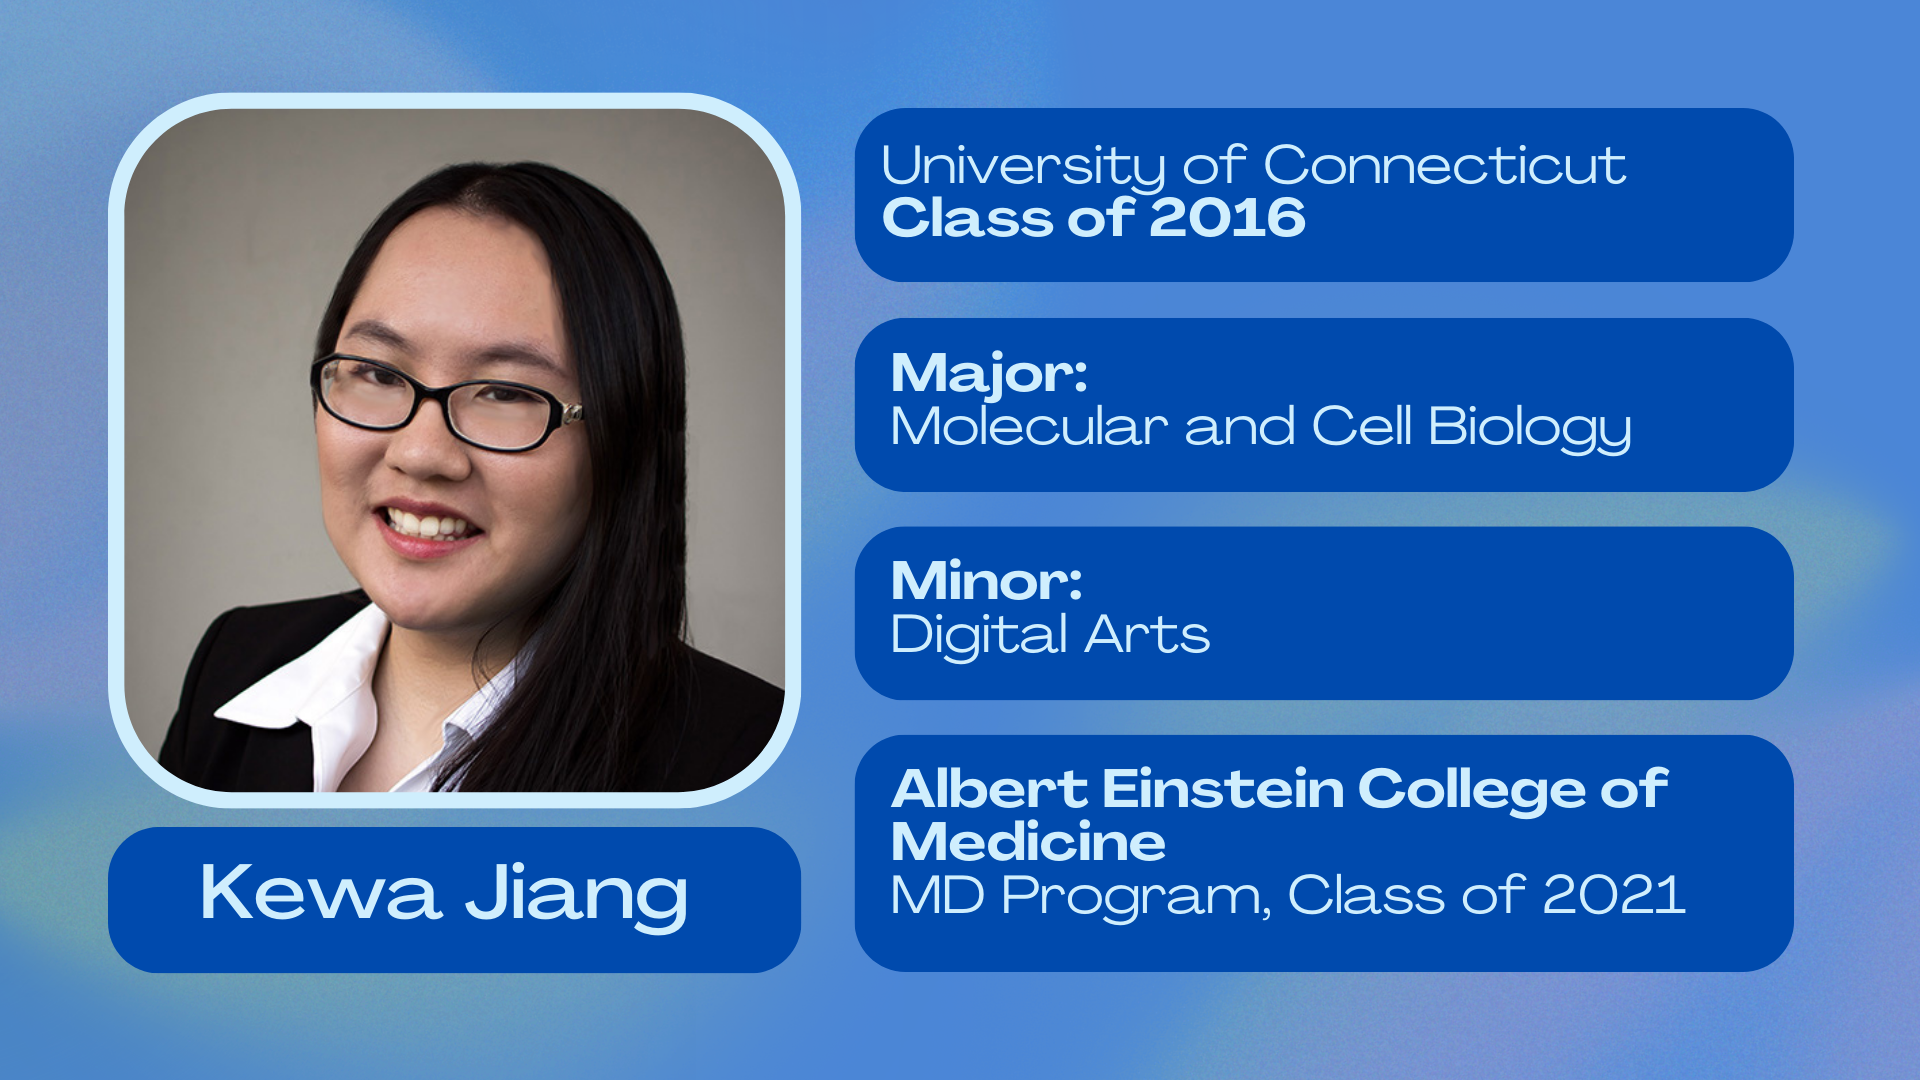 Kewa Jiang; University of Connecticut class of 2016; Major: Molecular and Cell Biology; Minor: Digital Arts; Albert Einstein College of Medicine MD program class of 2021